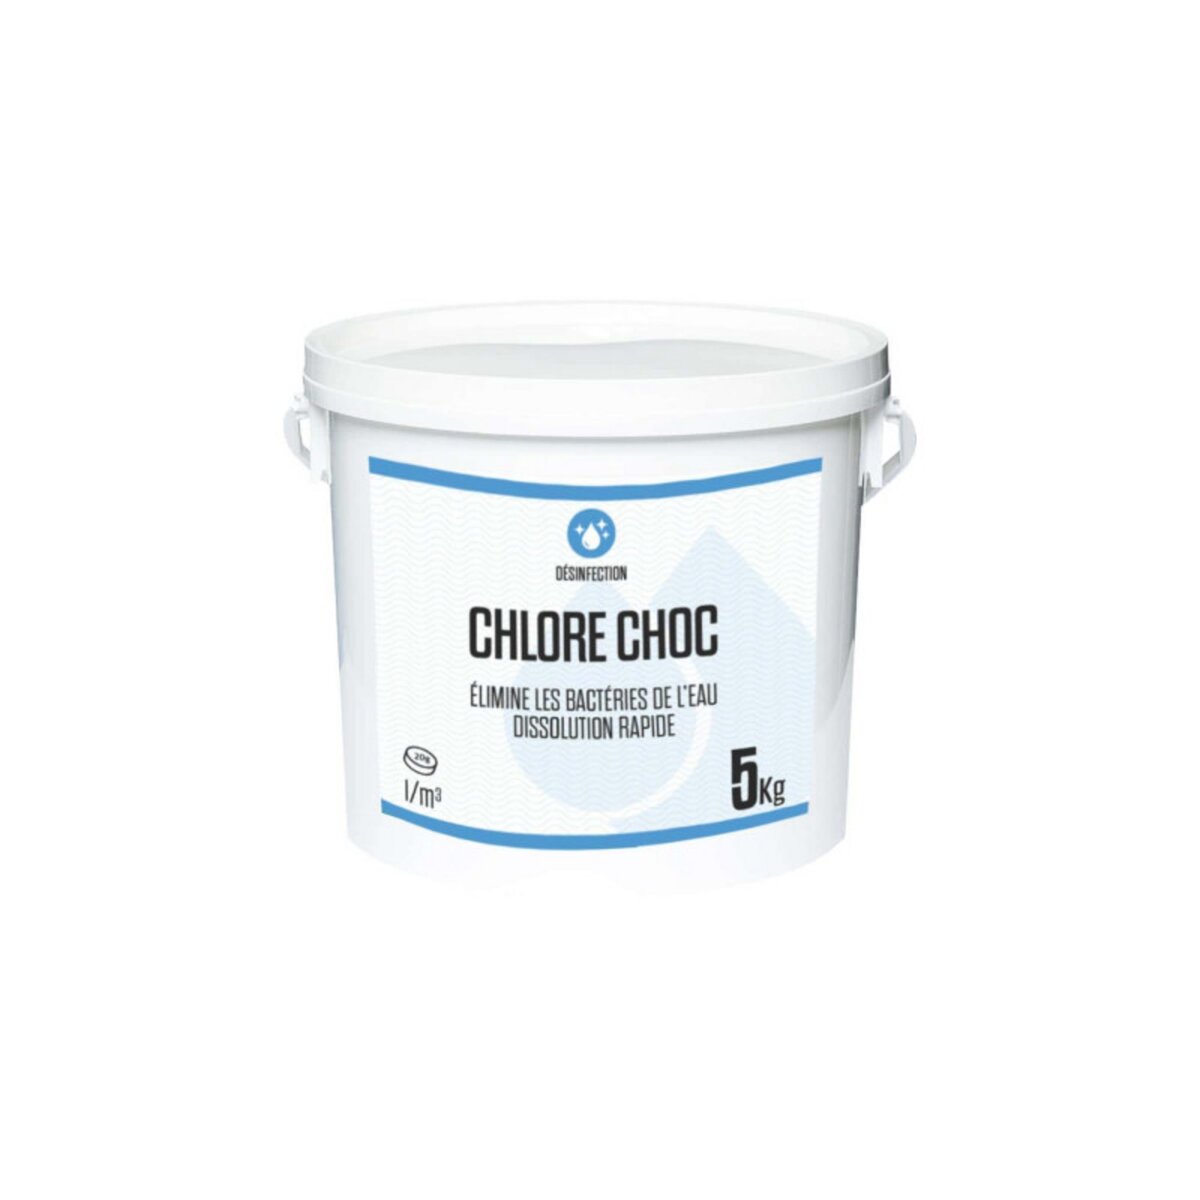 ESPACE-BRICOLAGE Chlore choc 5kg - pastilles 20g